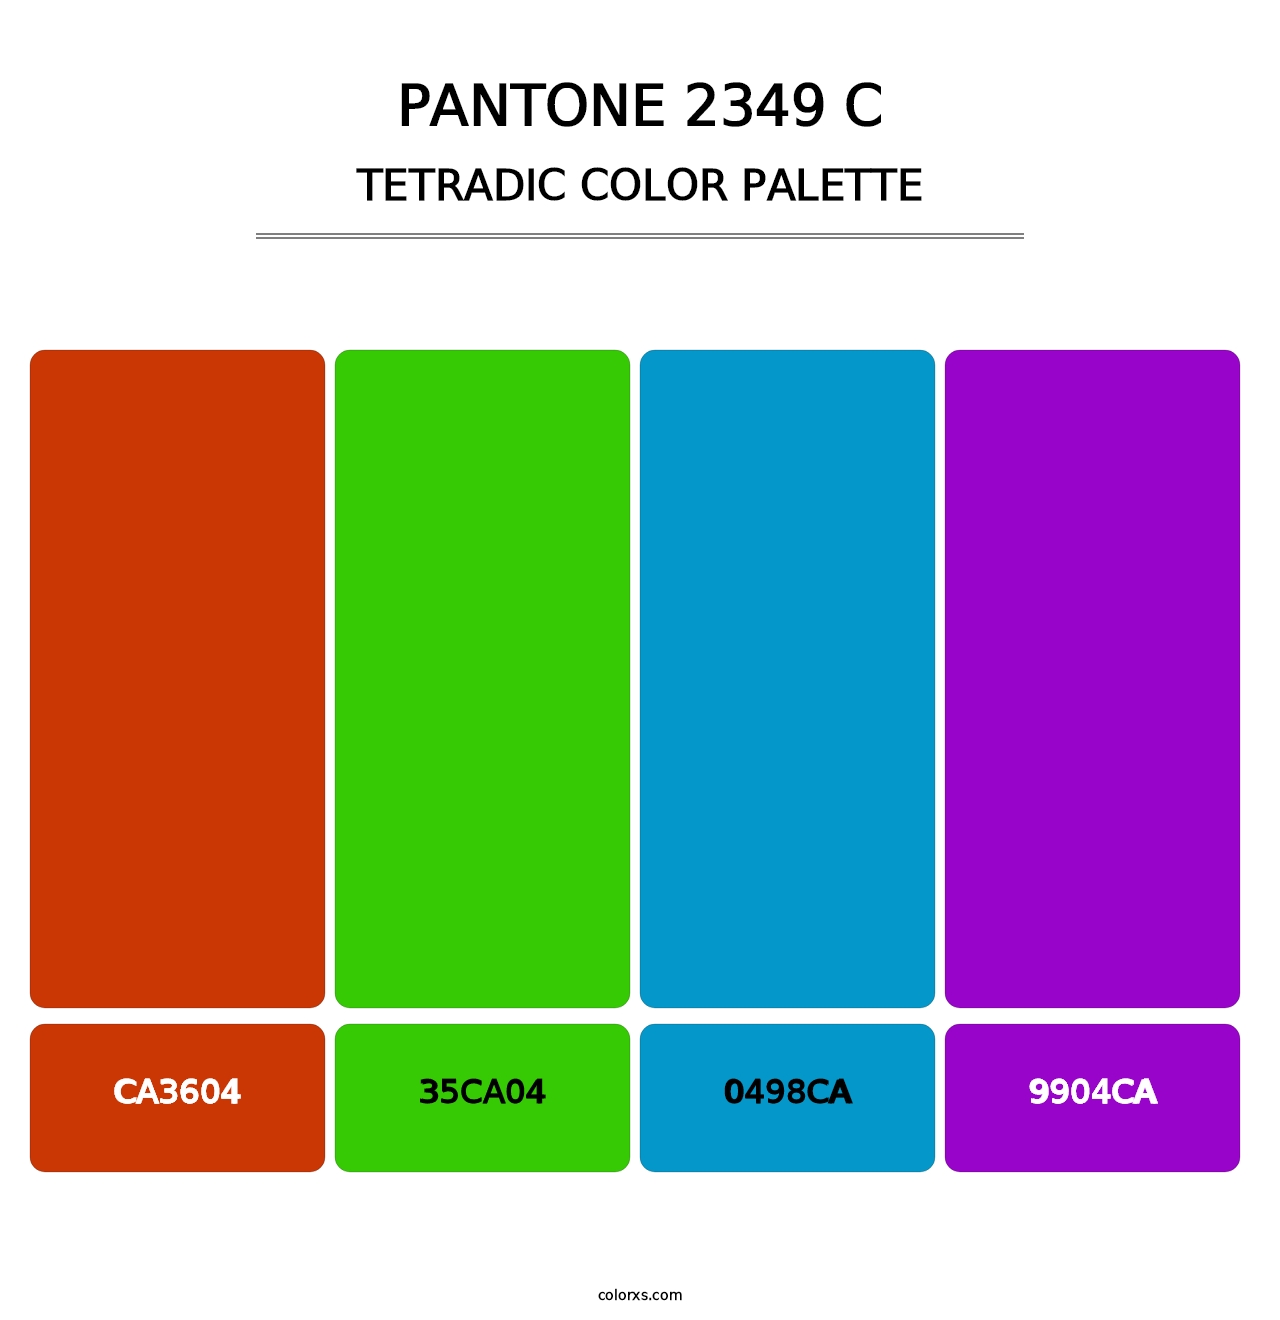 PANTONE 2349 C - Tetradic Color Palette